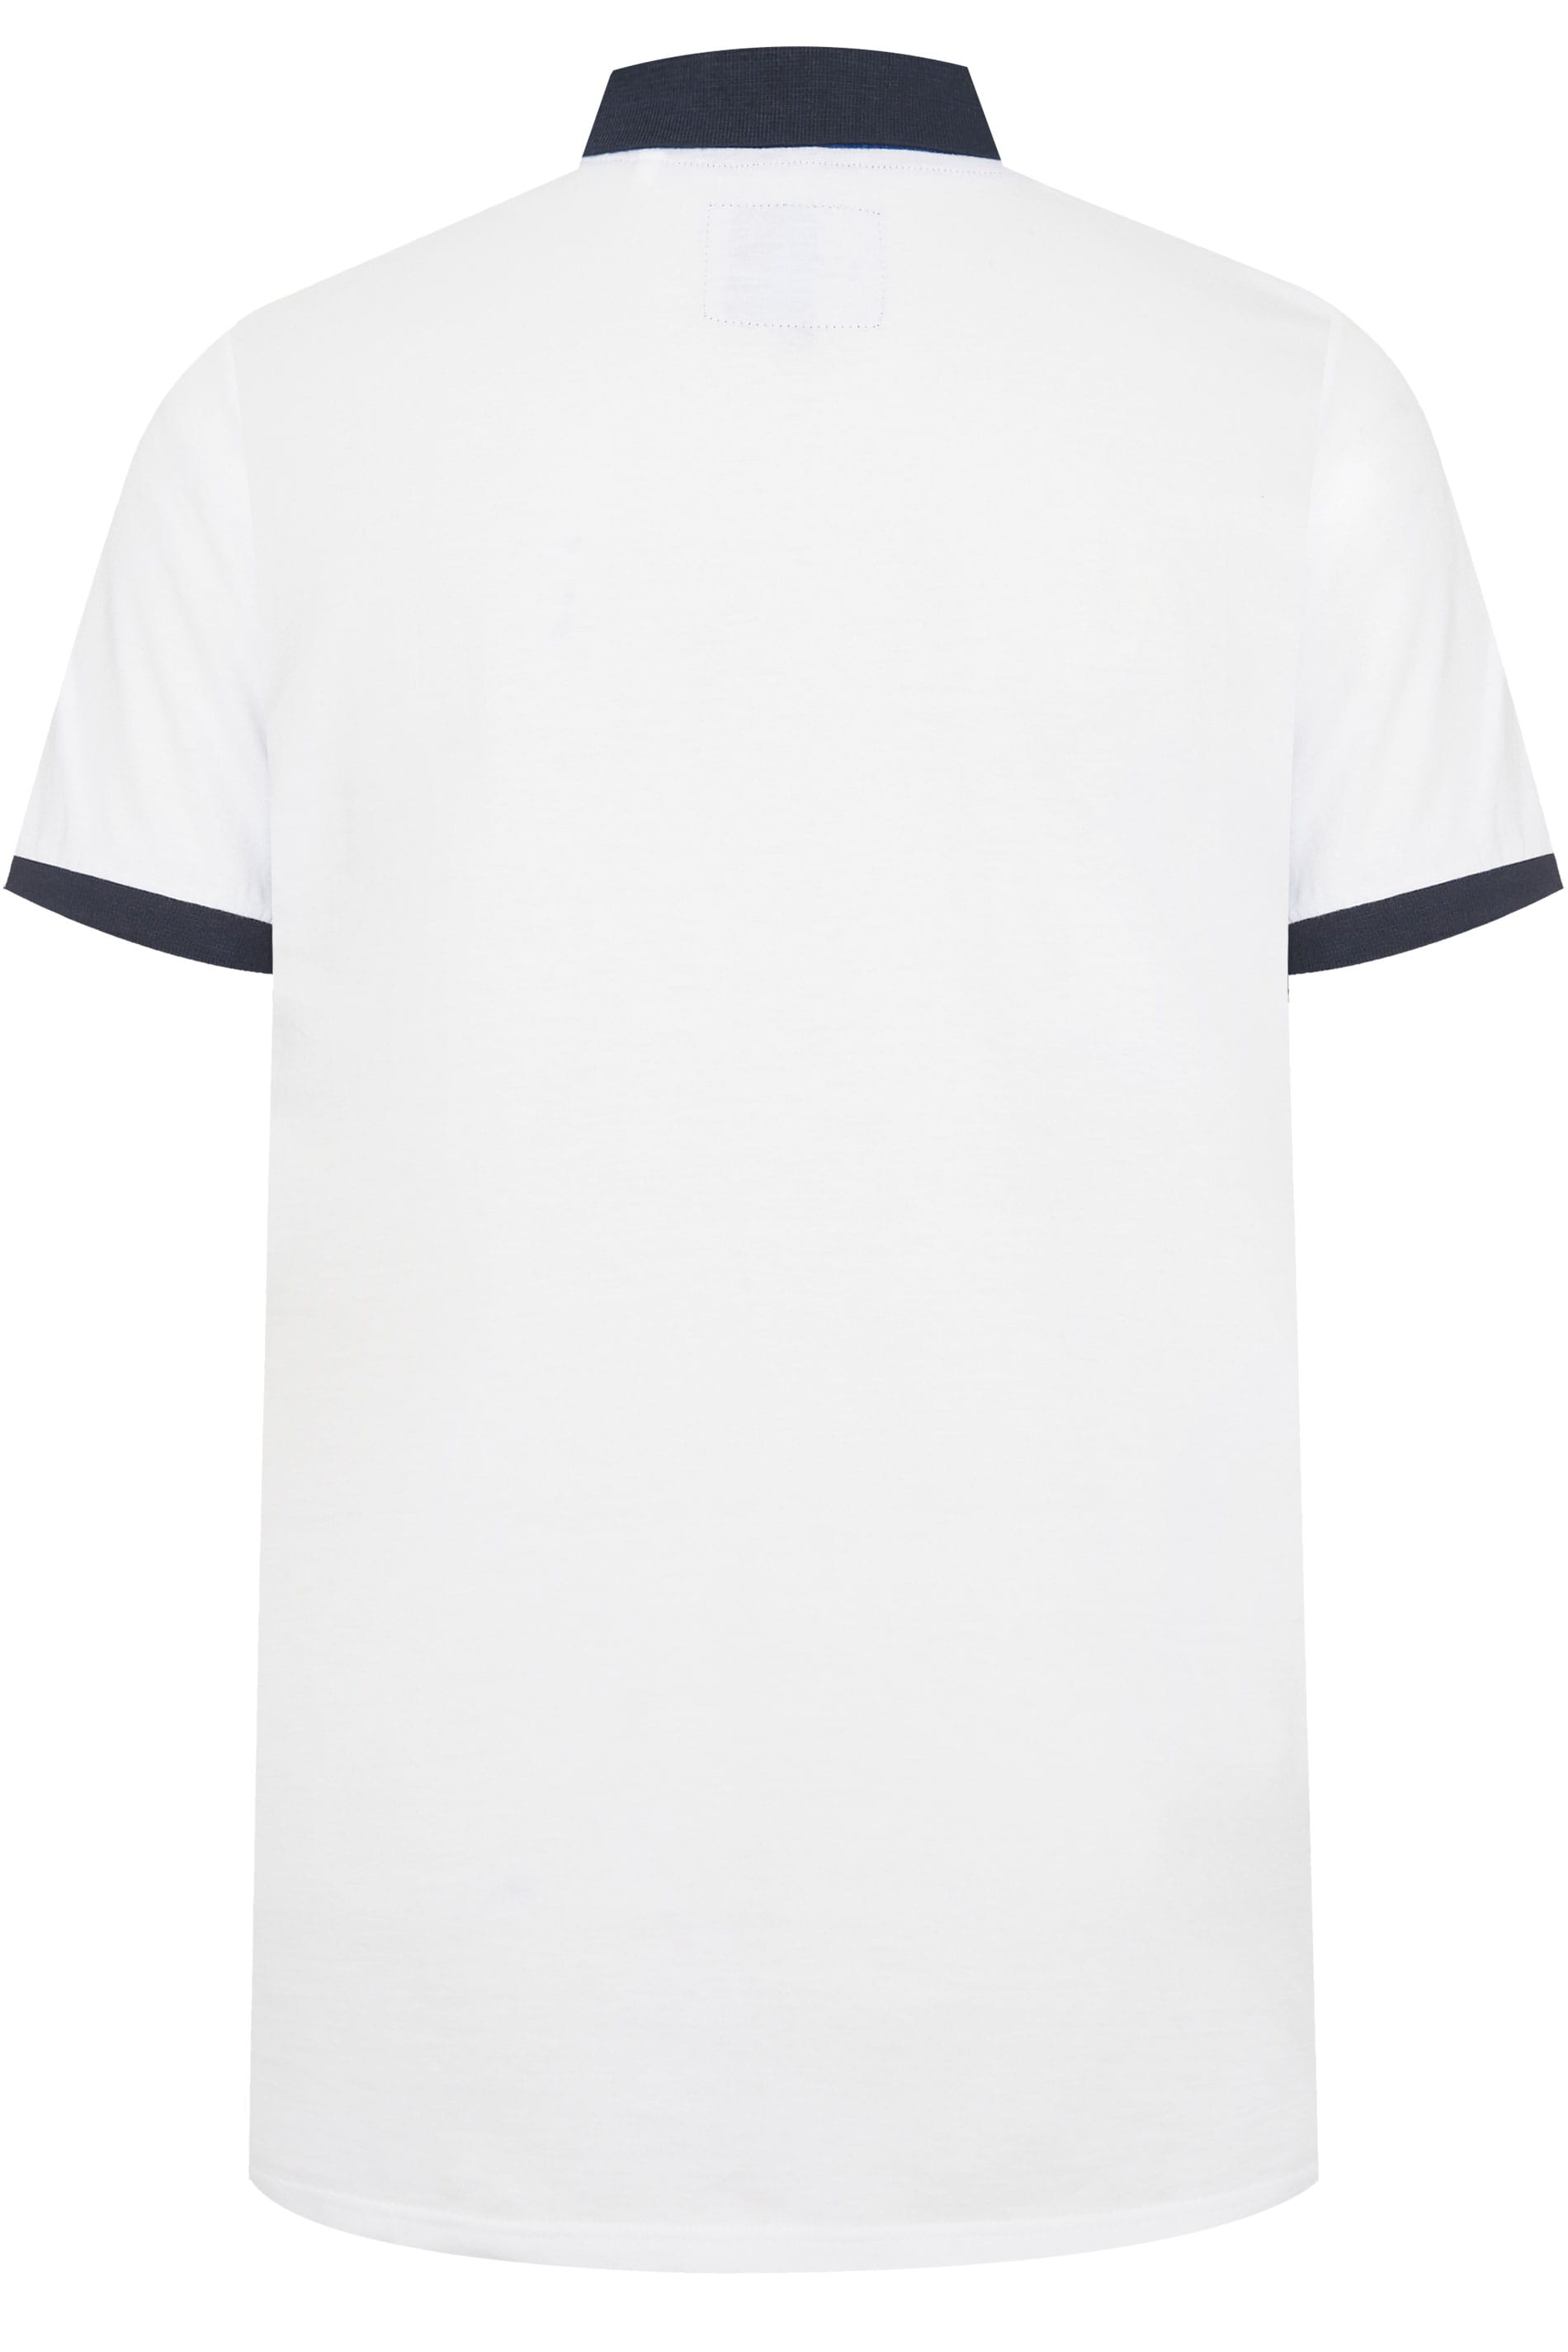 BadRhino White Colour Block Polo Shirt | BadRhino